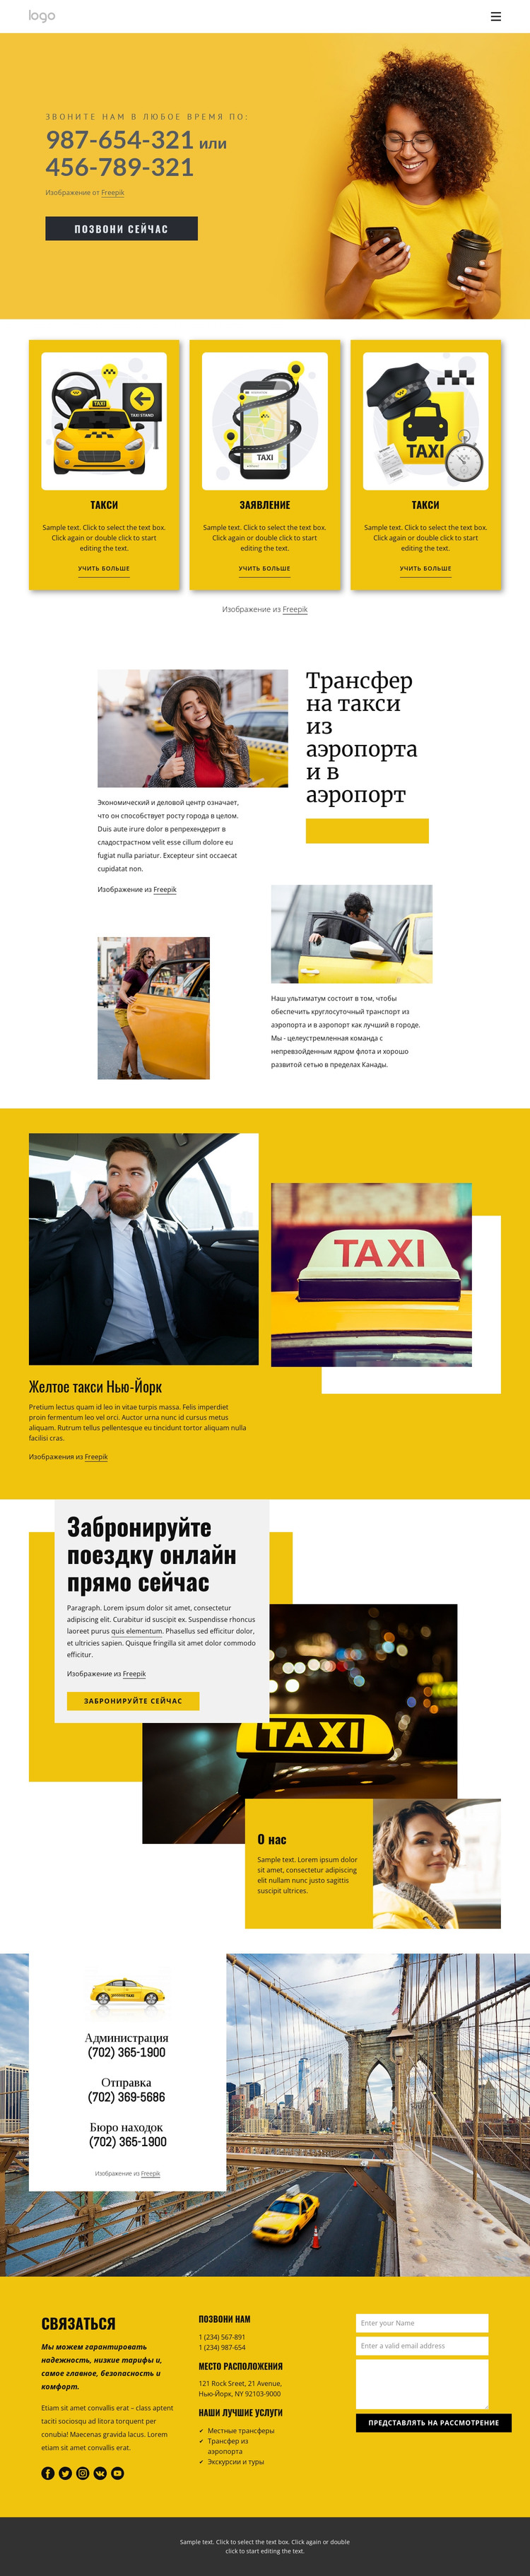 Качественное такси HTML шаблон